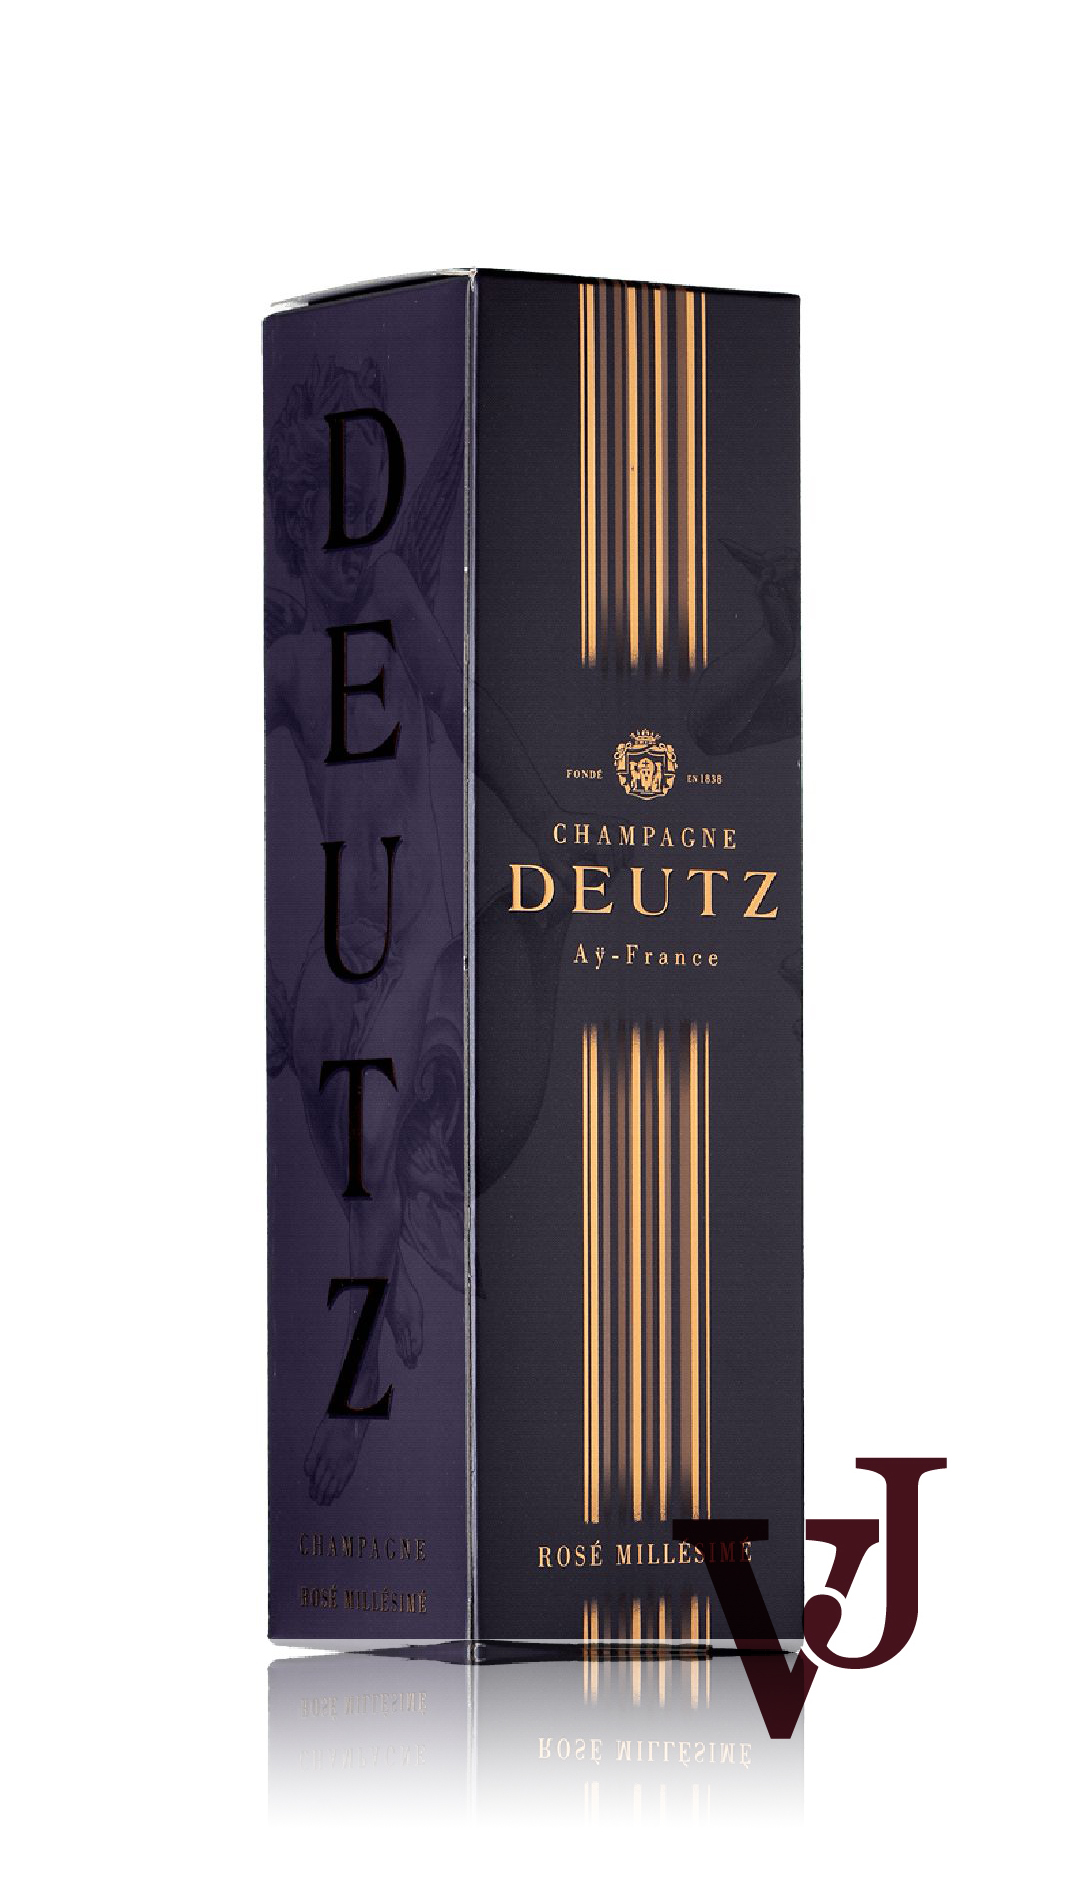 Rosé Vin - Deutz Brut Rosé Millésimé 2016 artikel nummer 9385701 från producenten Champagne Deutz från Frankrike